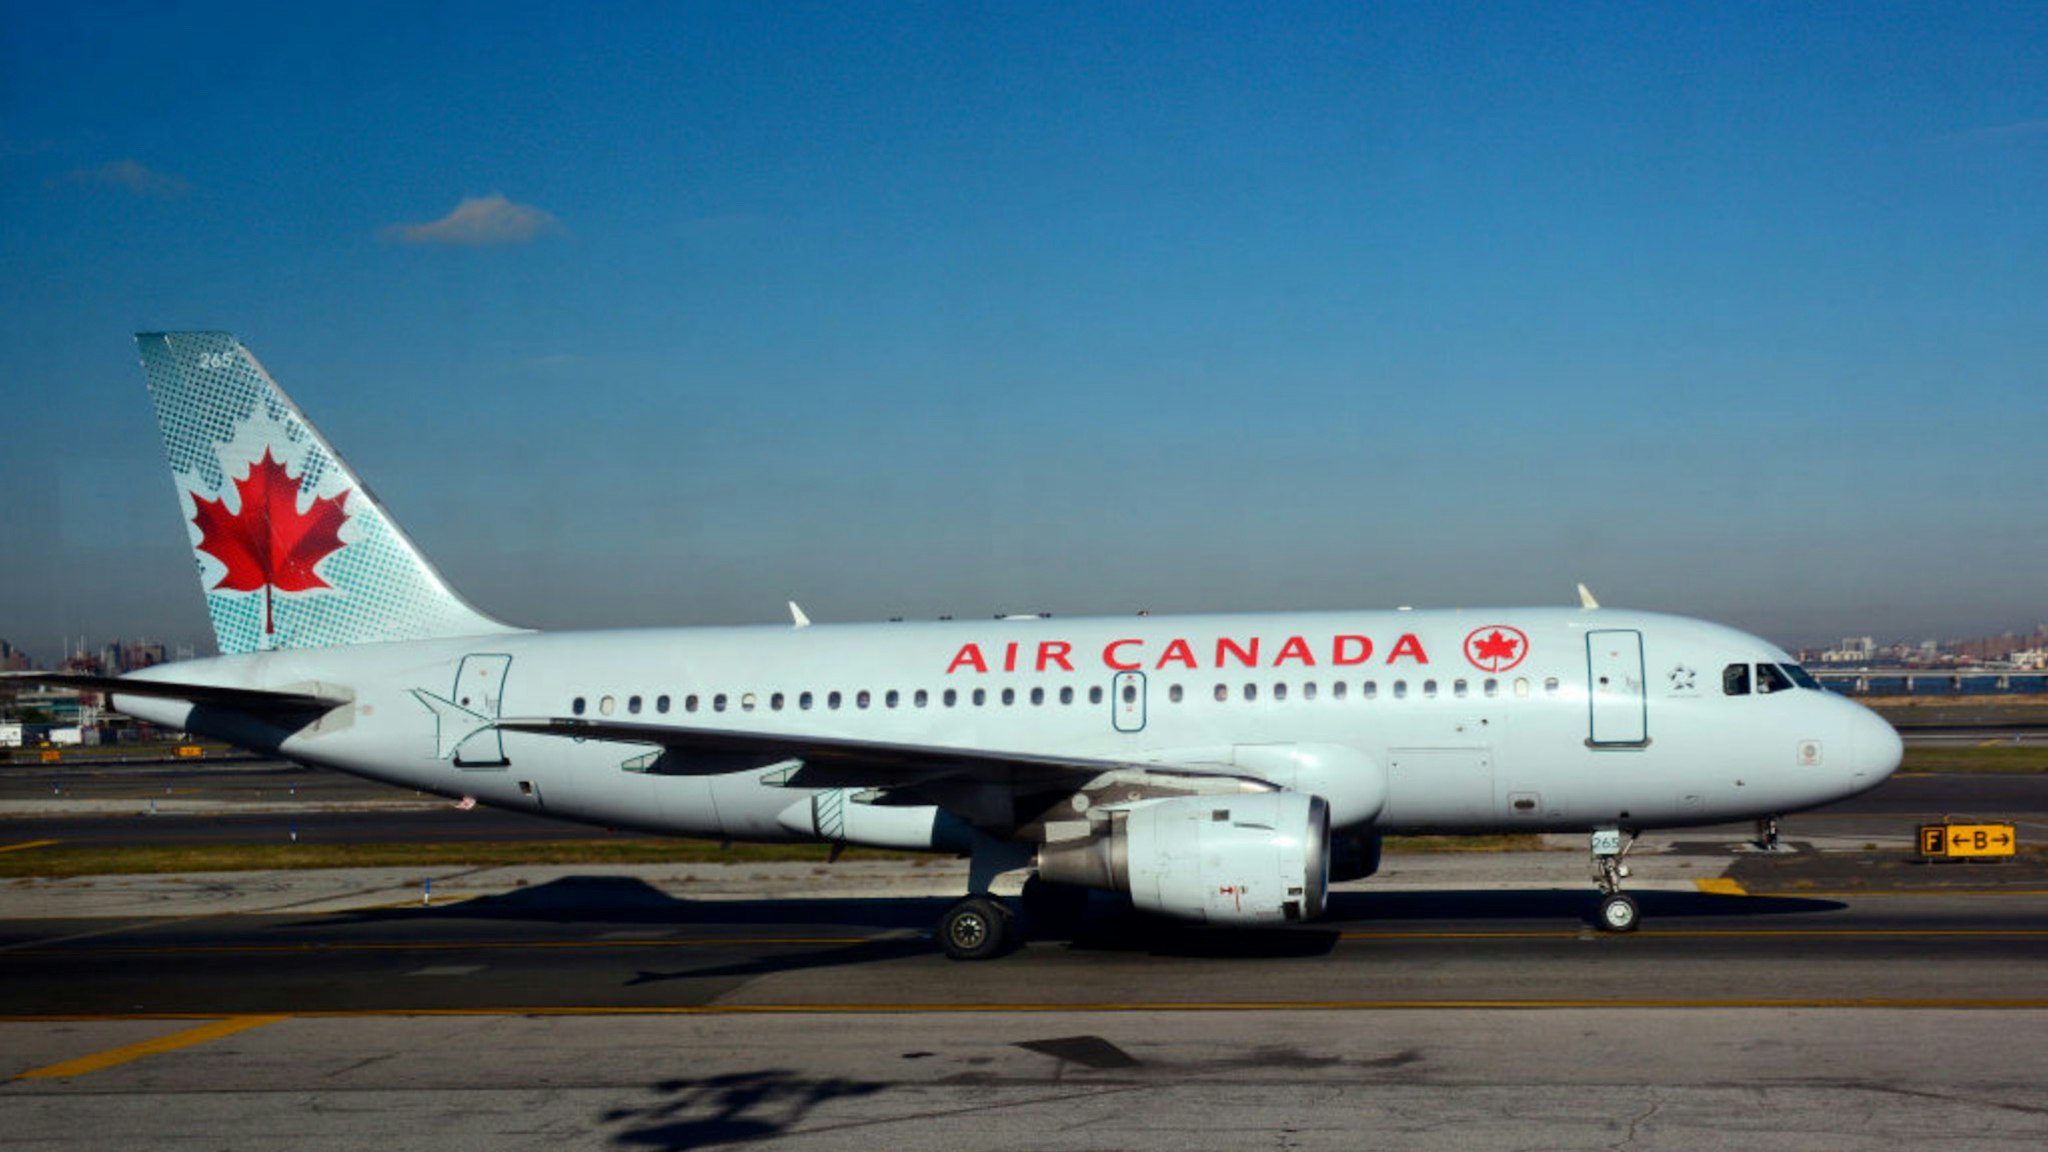 An Air Canada Express passenger jet lands at LaGuardia Airport in New York, New York.